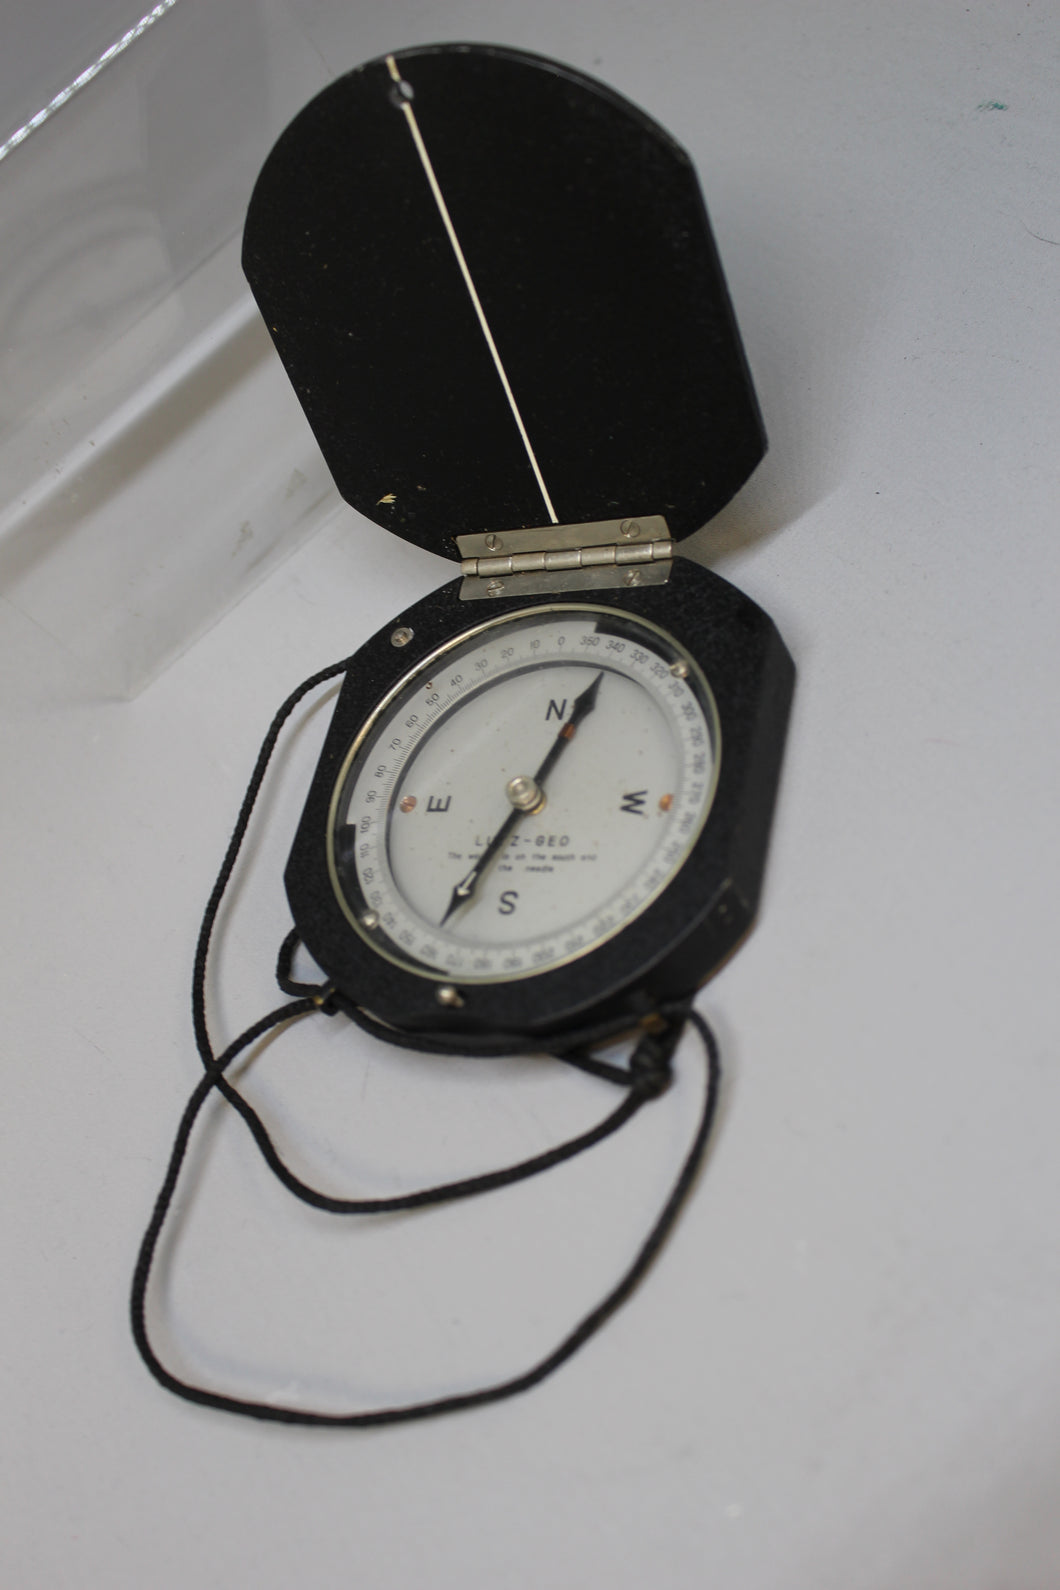 Vintage Lutz-Geo Compass  - Used